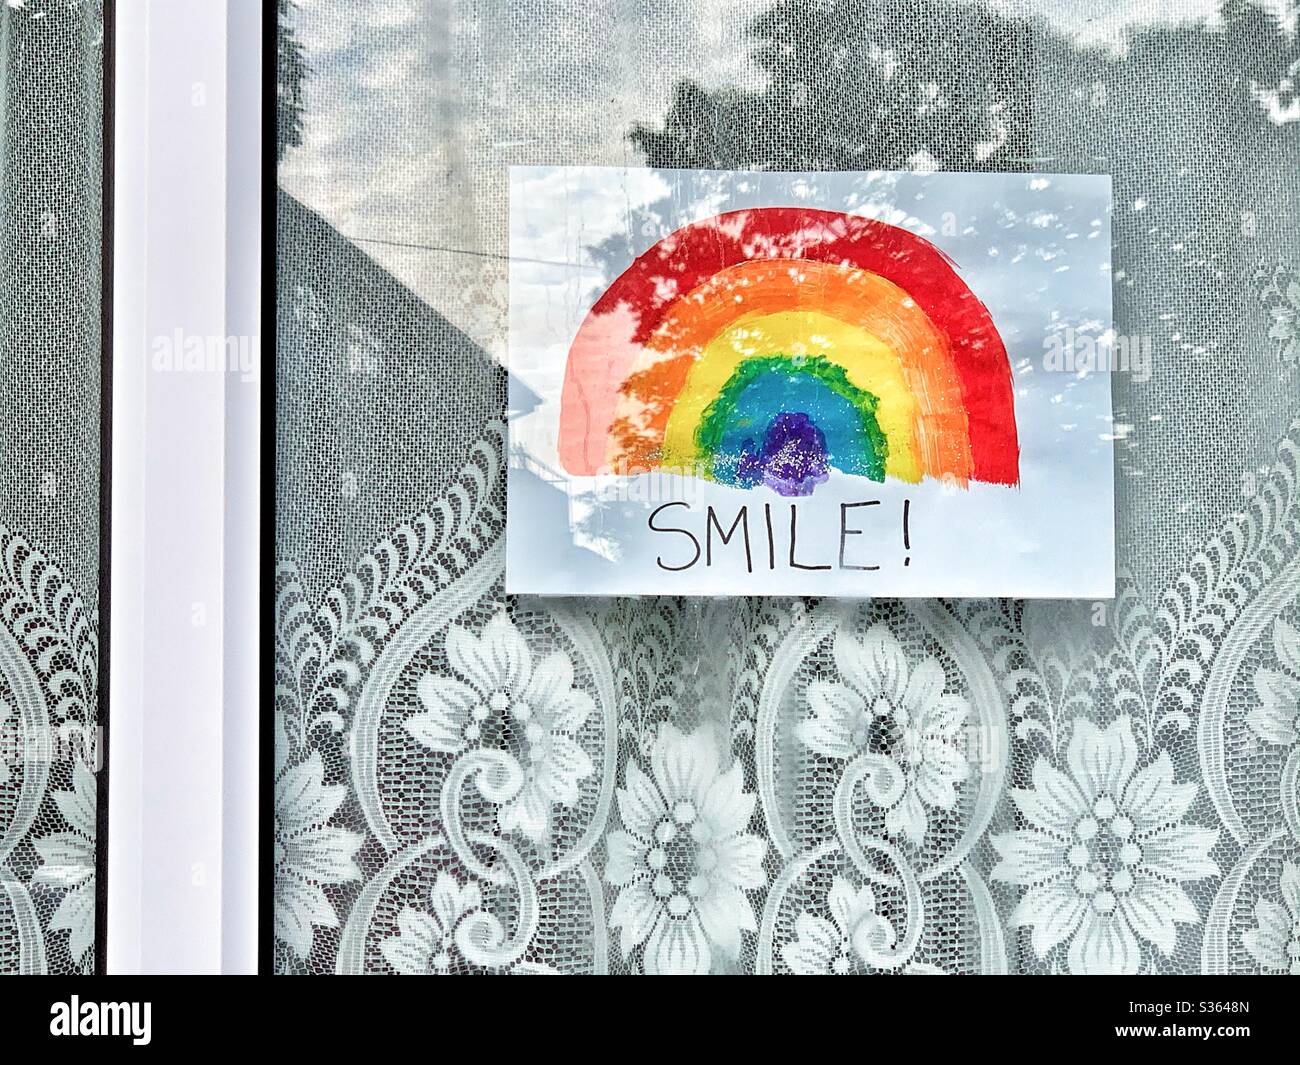 Mensaje arco iris en una ventana durante la pandemia del Coronavirus. Foto de stock